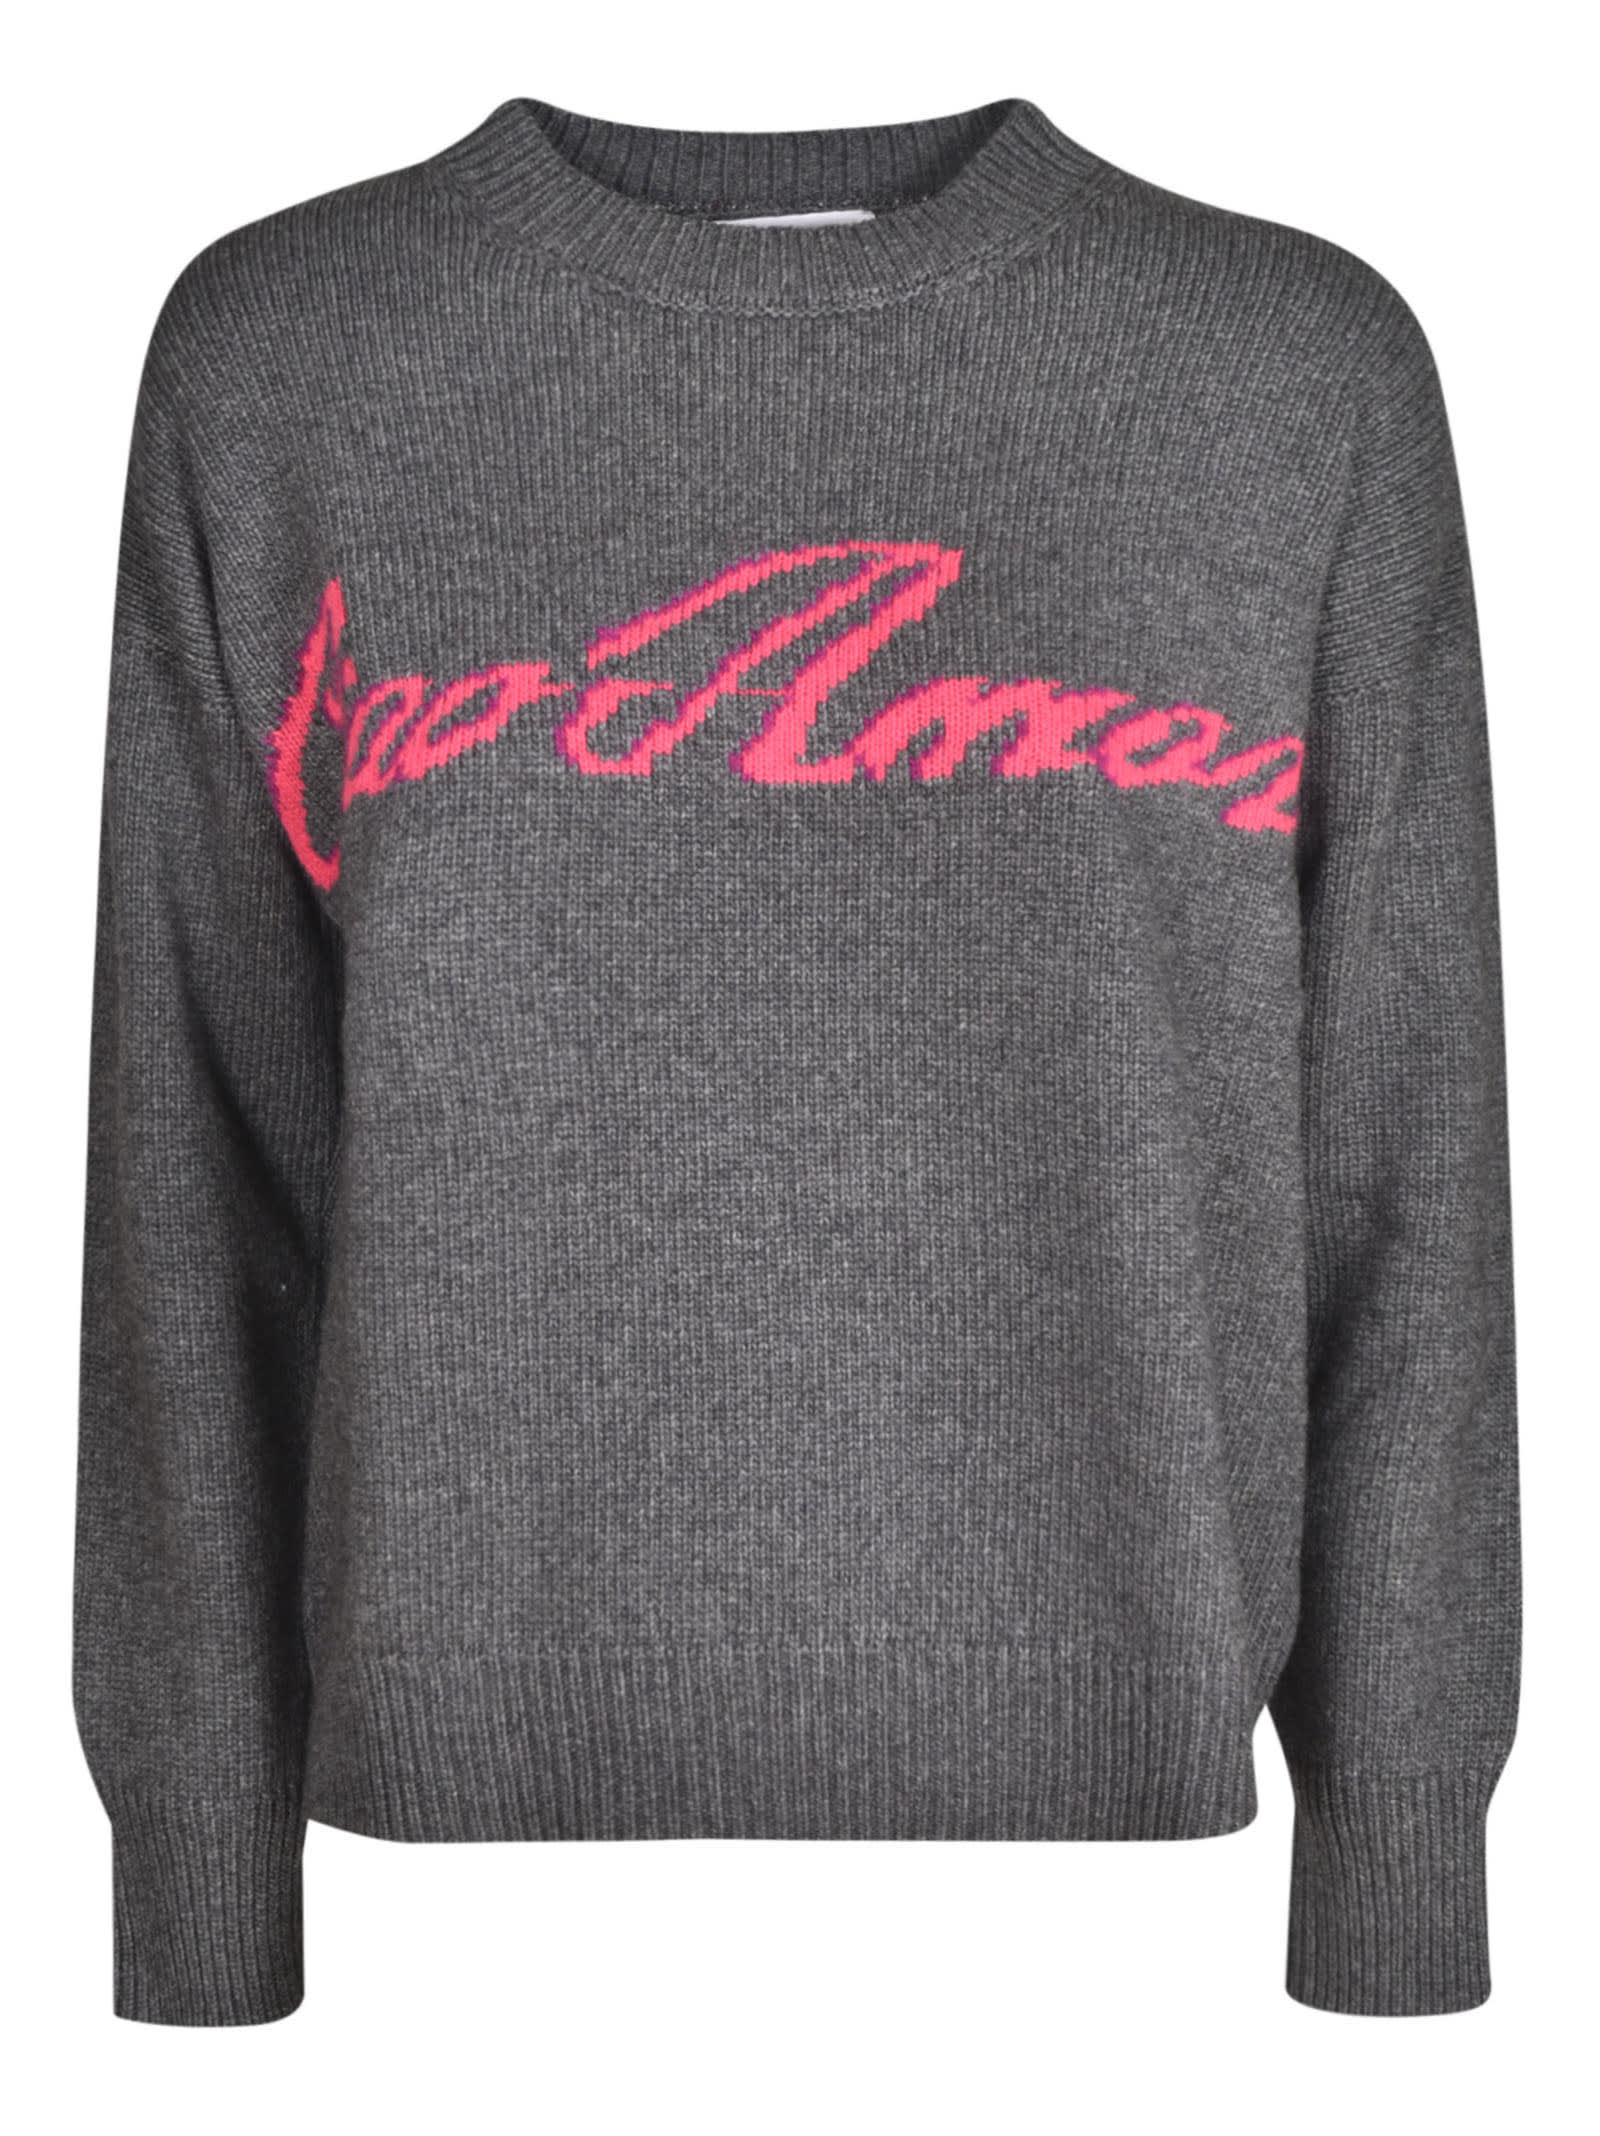 Giada Benincasa Ciao Amore Embroidered Rib Sweater